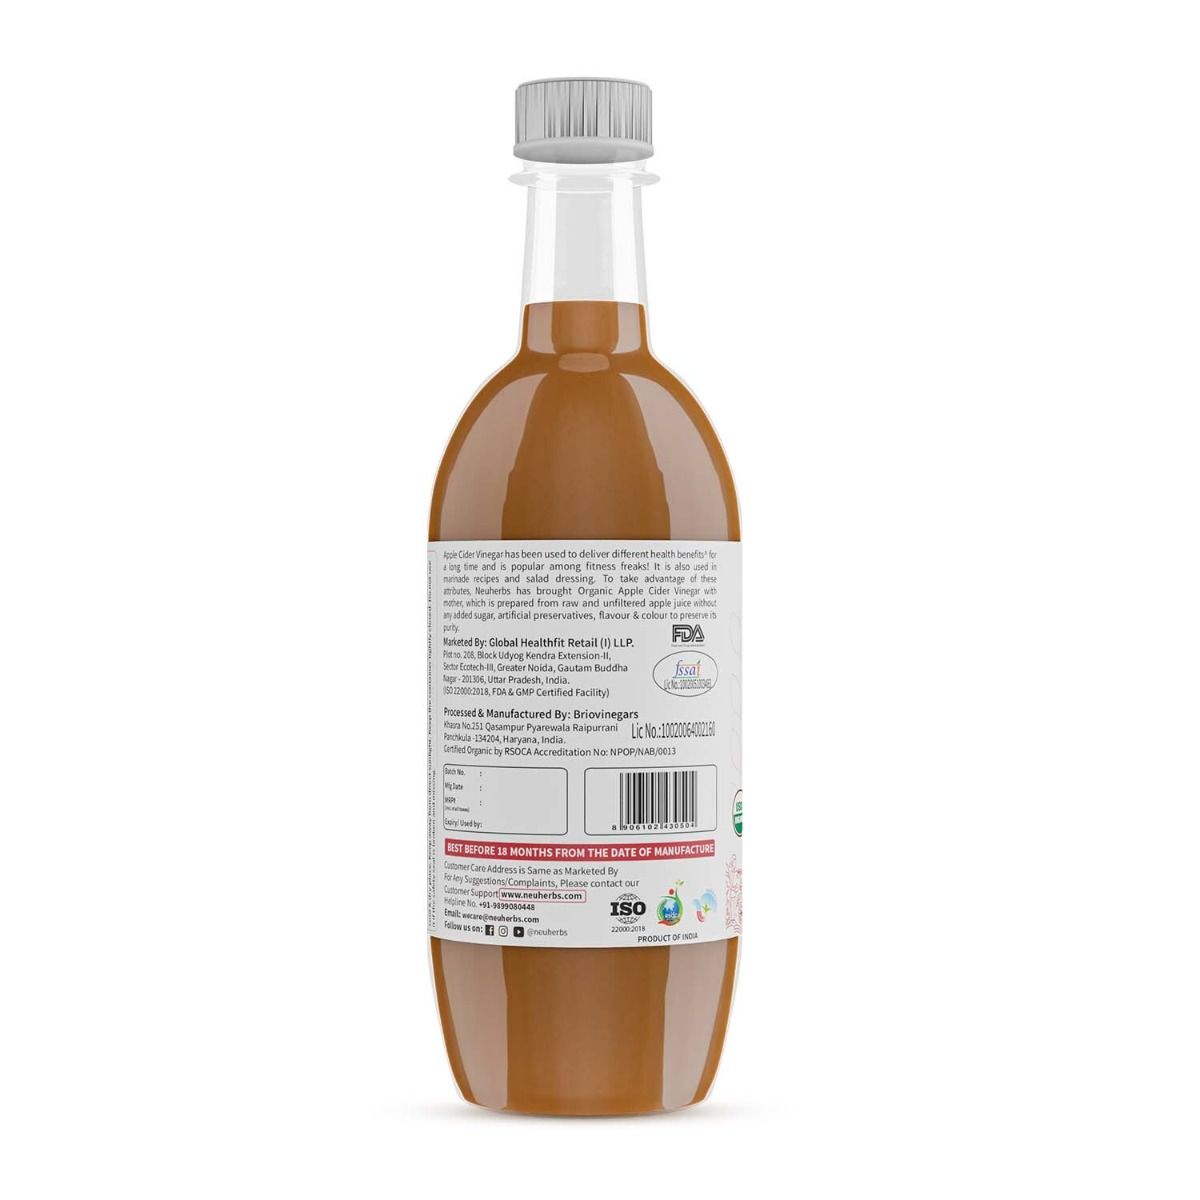 Neuherbs Organic Apple Cider Vinegar with Mother, 500 ml , Pack of 1 